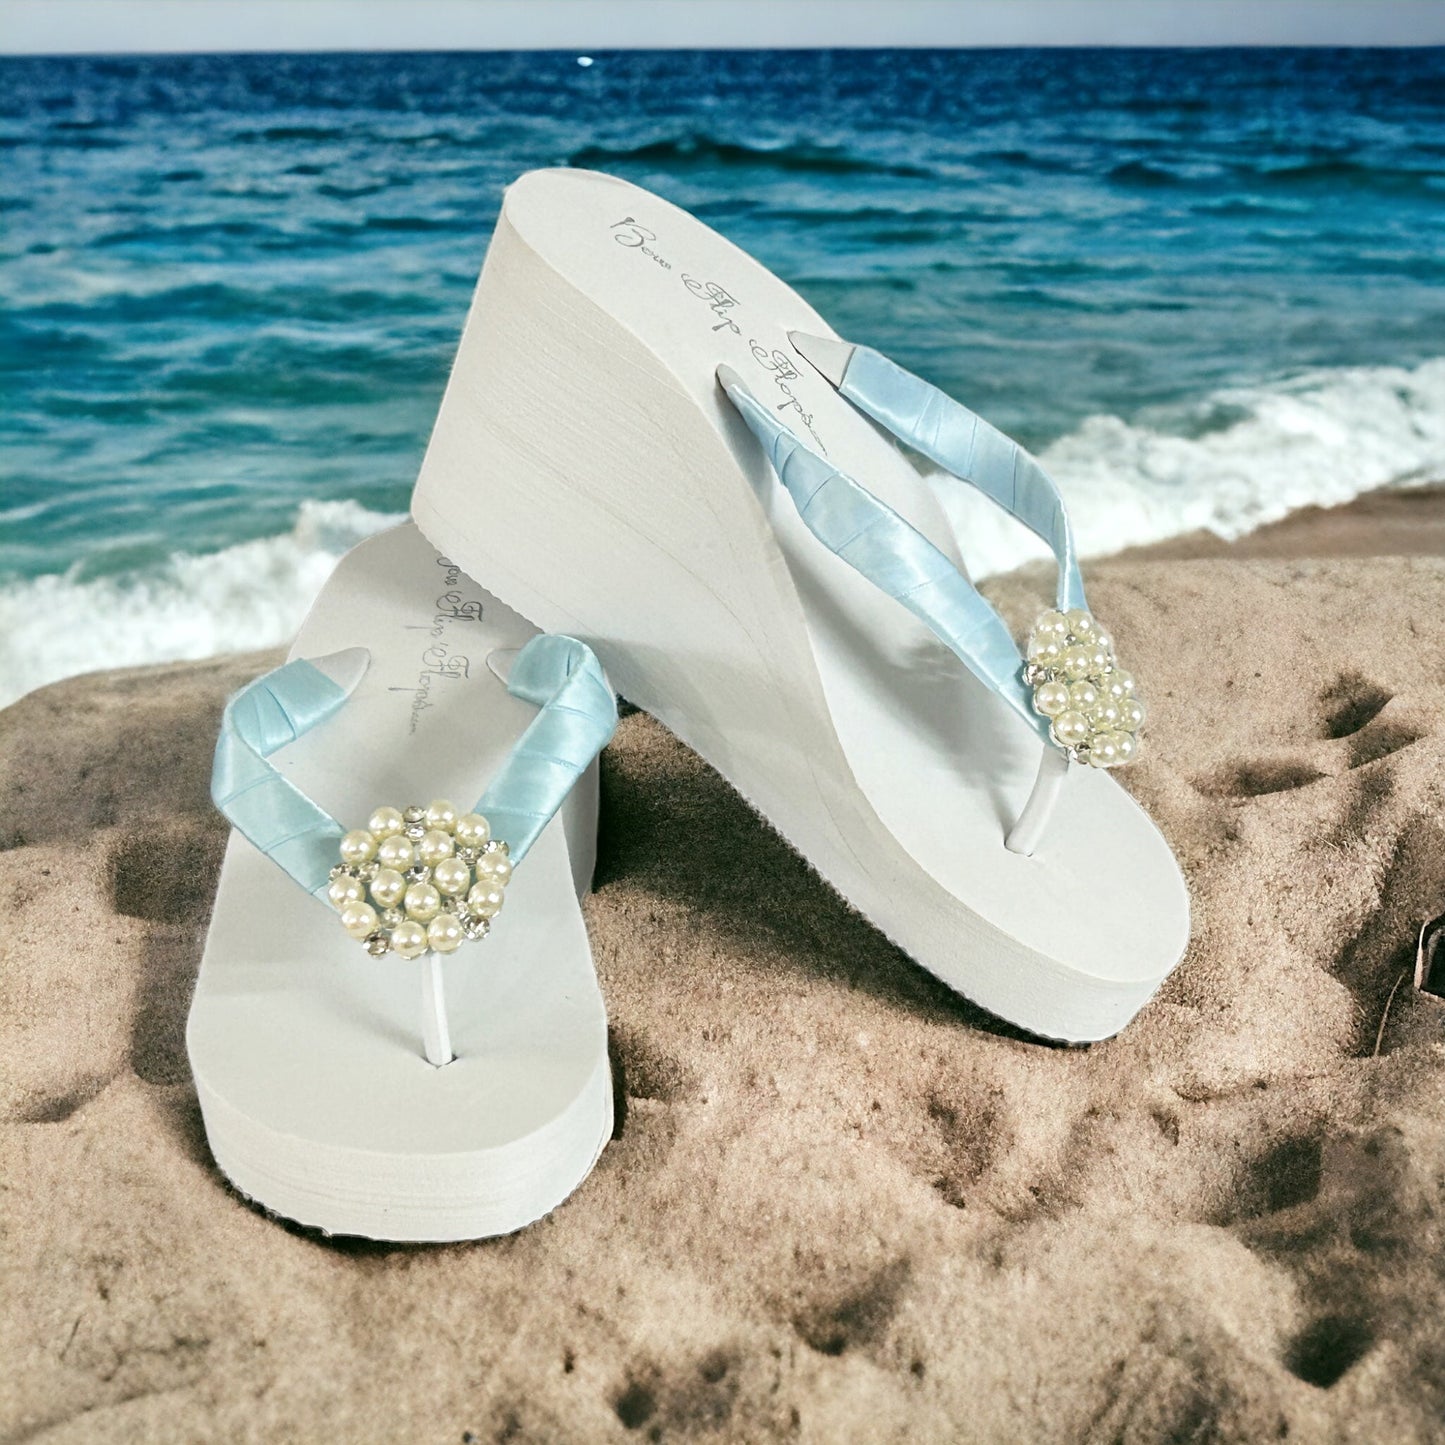 Tropic Teal & Rhinestone Infinity Flip Flop Sandals, Beach or Destination